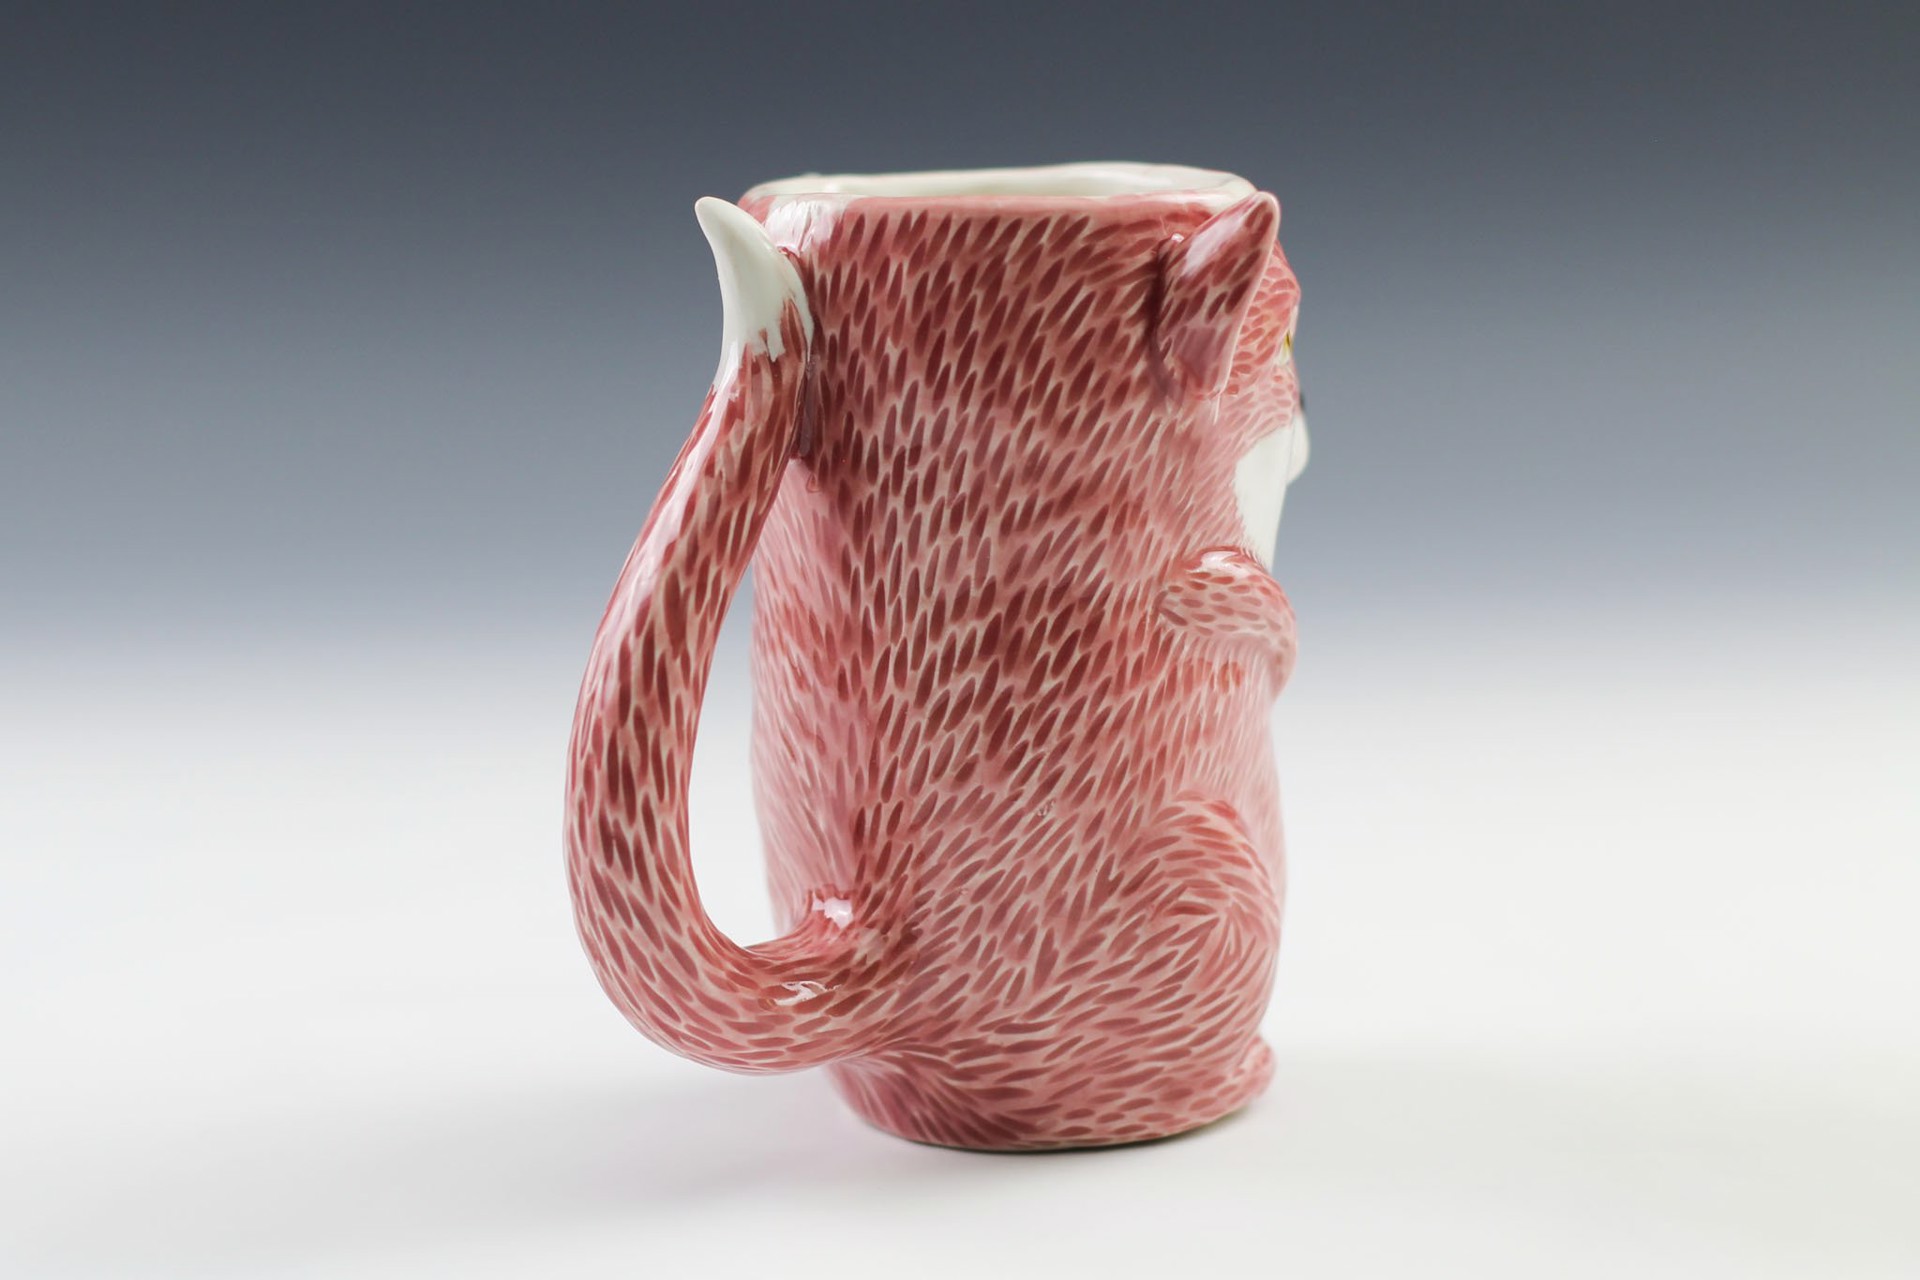 Pink Fox Mug by Debbie Kupinsky